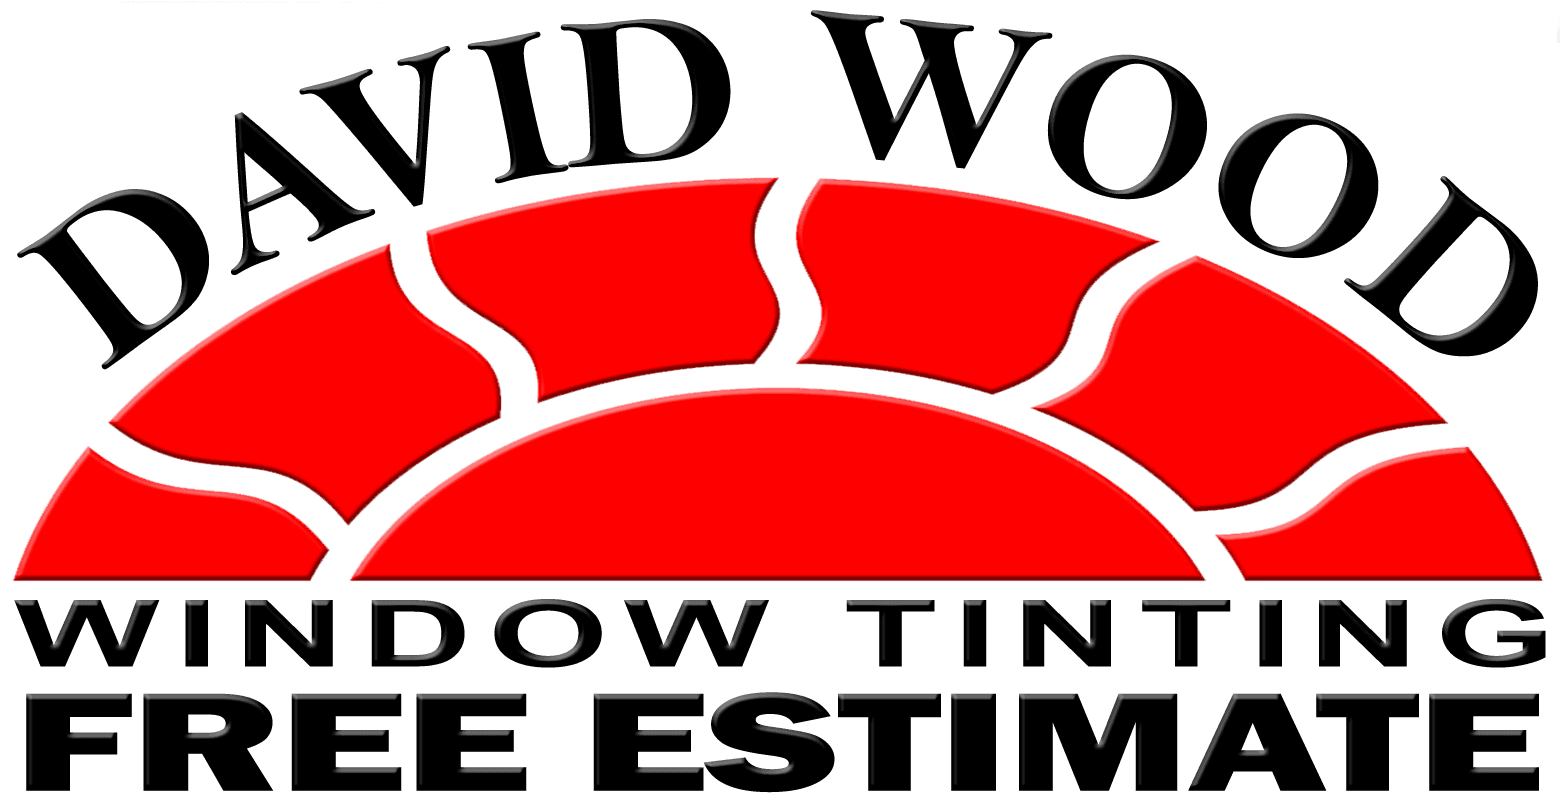 David wood window tinting free estimate Jupiter fl